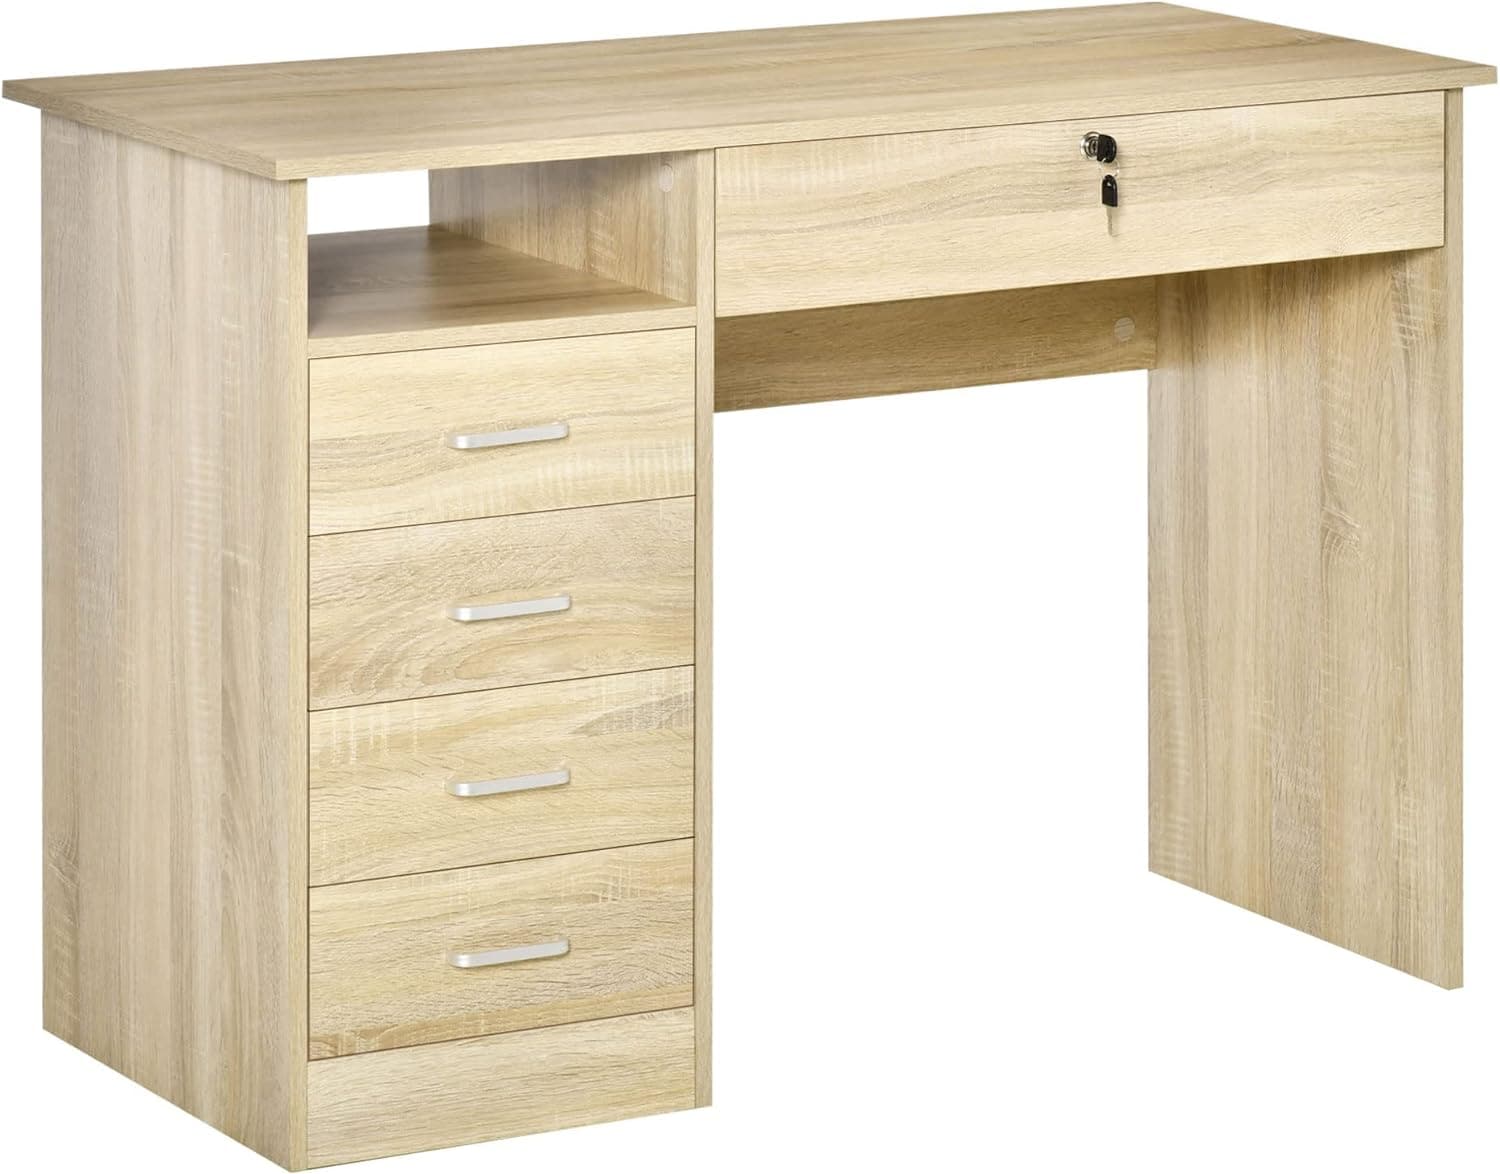 ProperAV Extra Home Office Desk with Lockable Drawer & Storage Shelf (Brown)